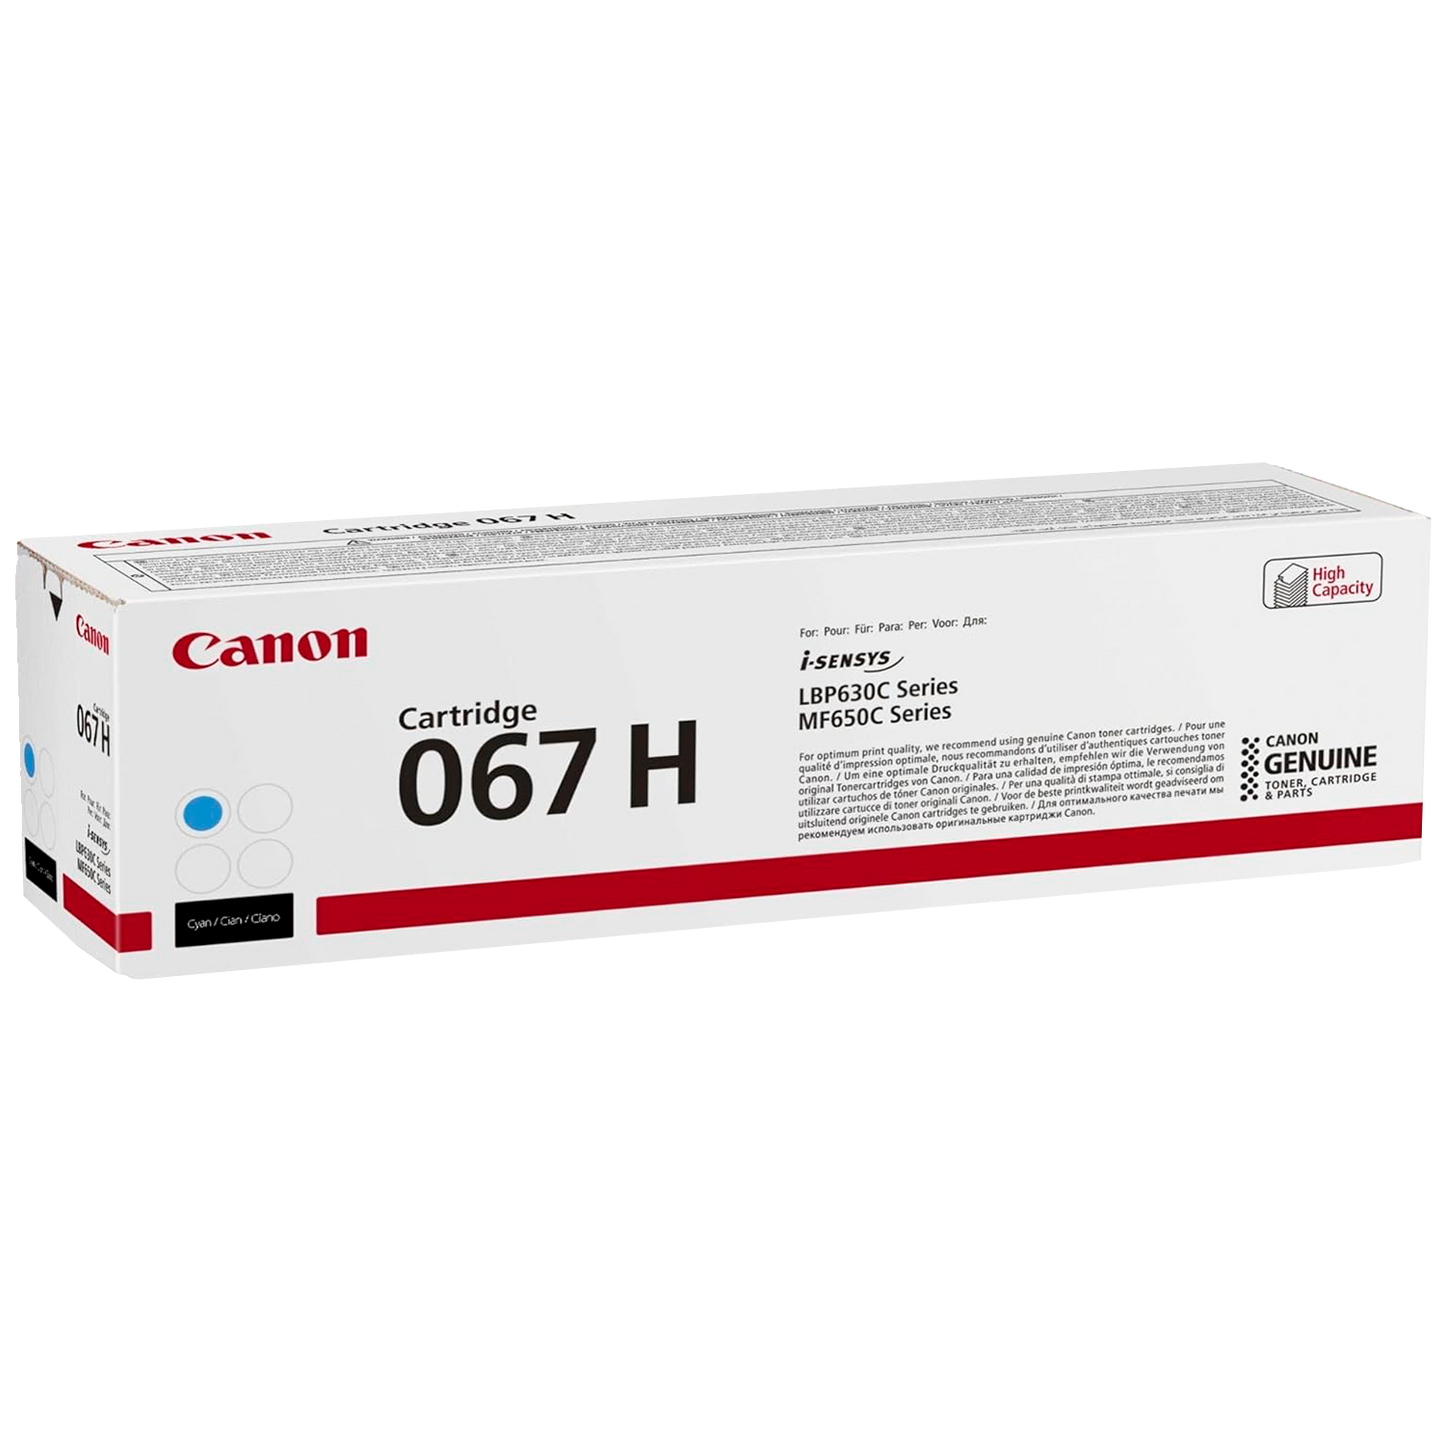 Canon 067 H High Yield Toner Cartridge, Cyan